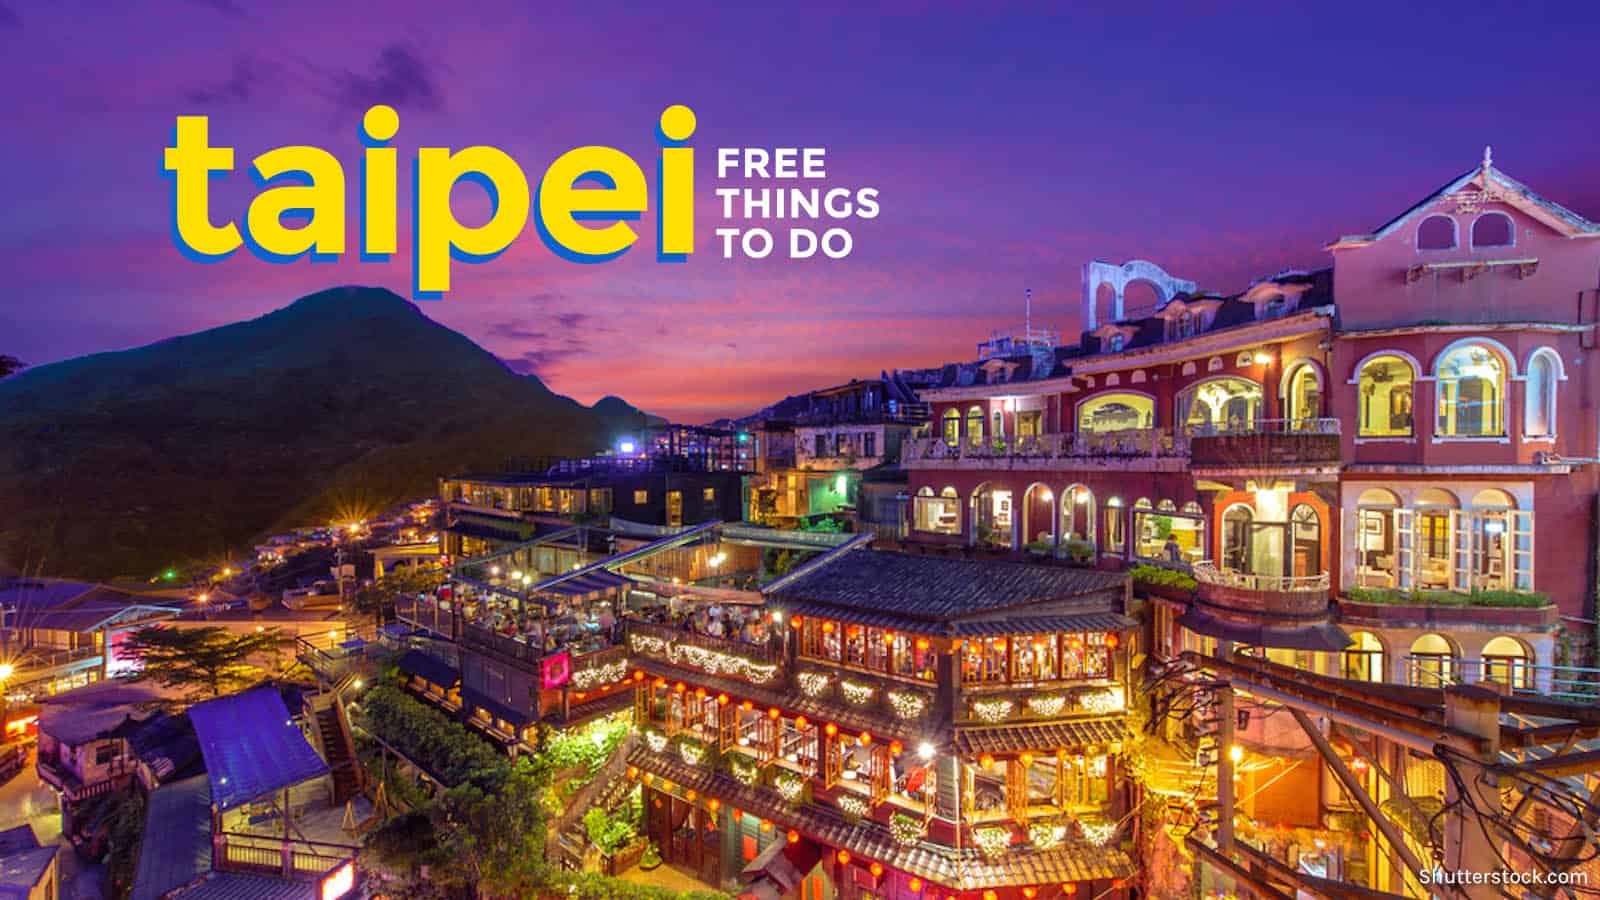 10 FREE Things to Do in TAIPEI, TAIWAN